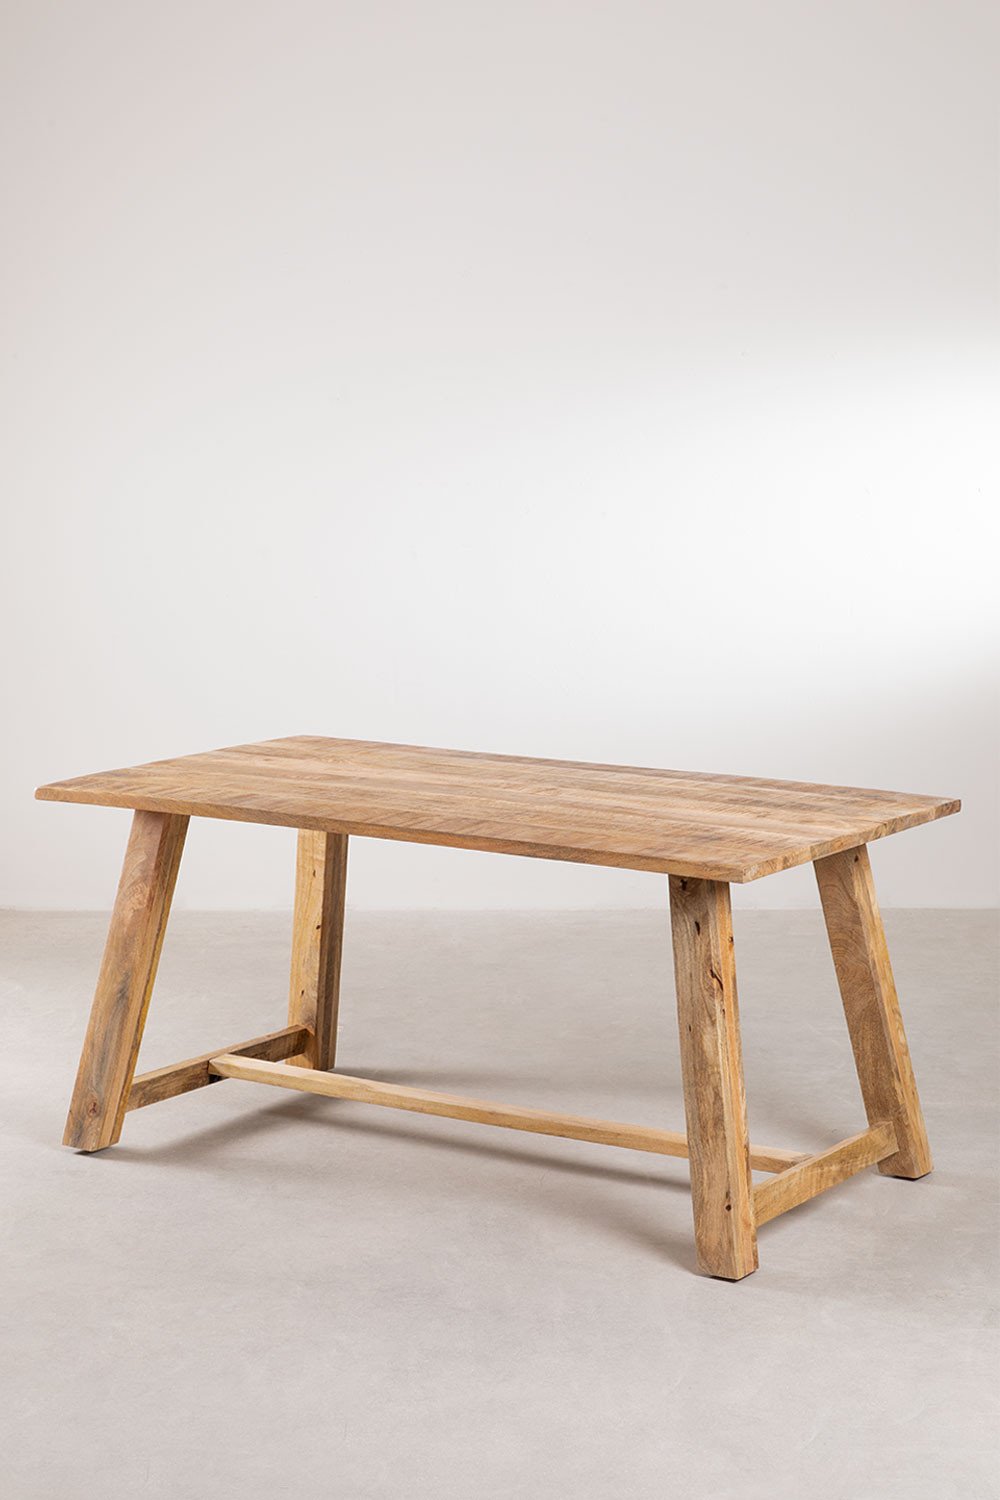 Mango Wood Rectangular Dining Table (160 x 90 cm) Zarek - SKLUM